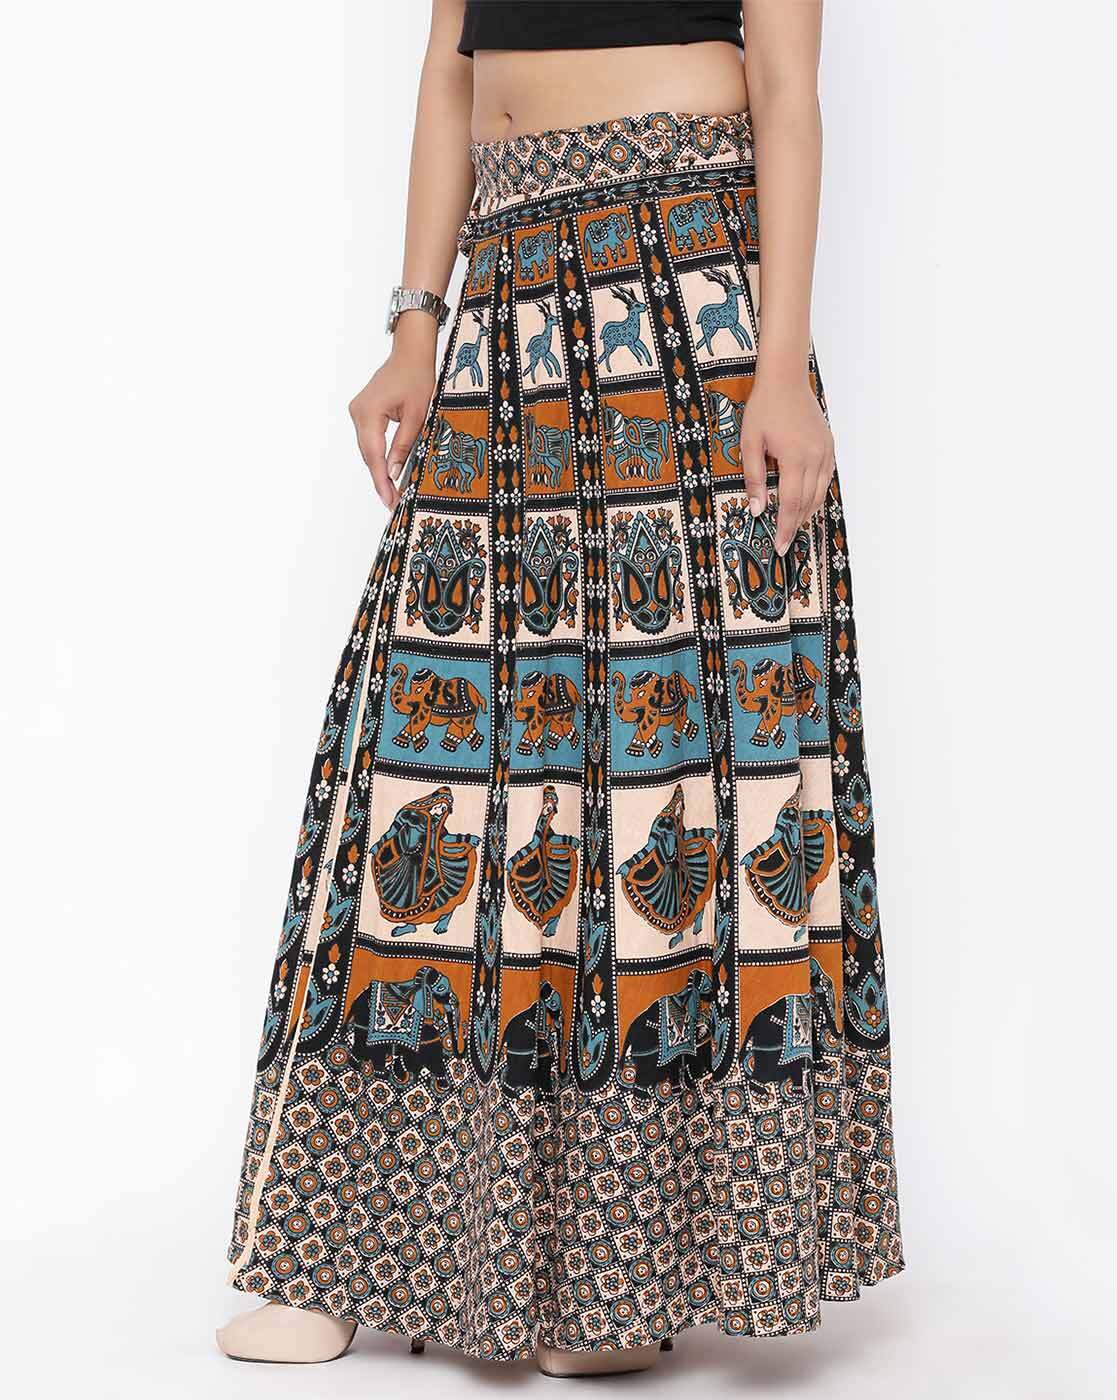 Cotton Printed Stylish Straight Wraparound Skirt at Rs 550/piece in Jodhpur